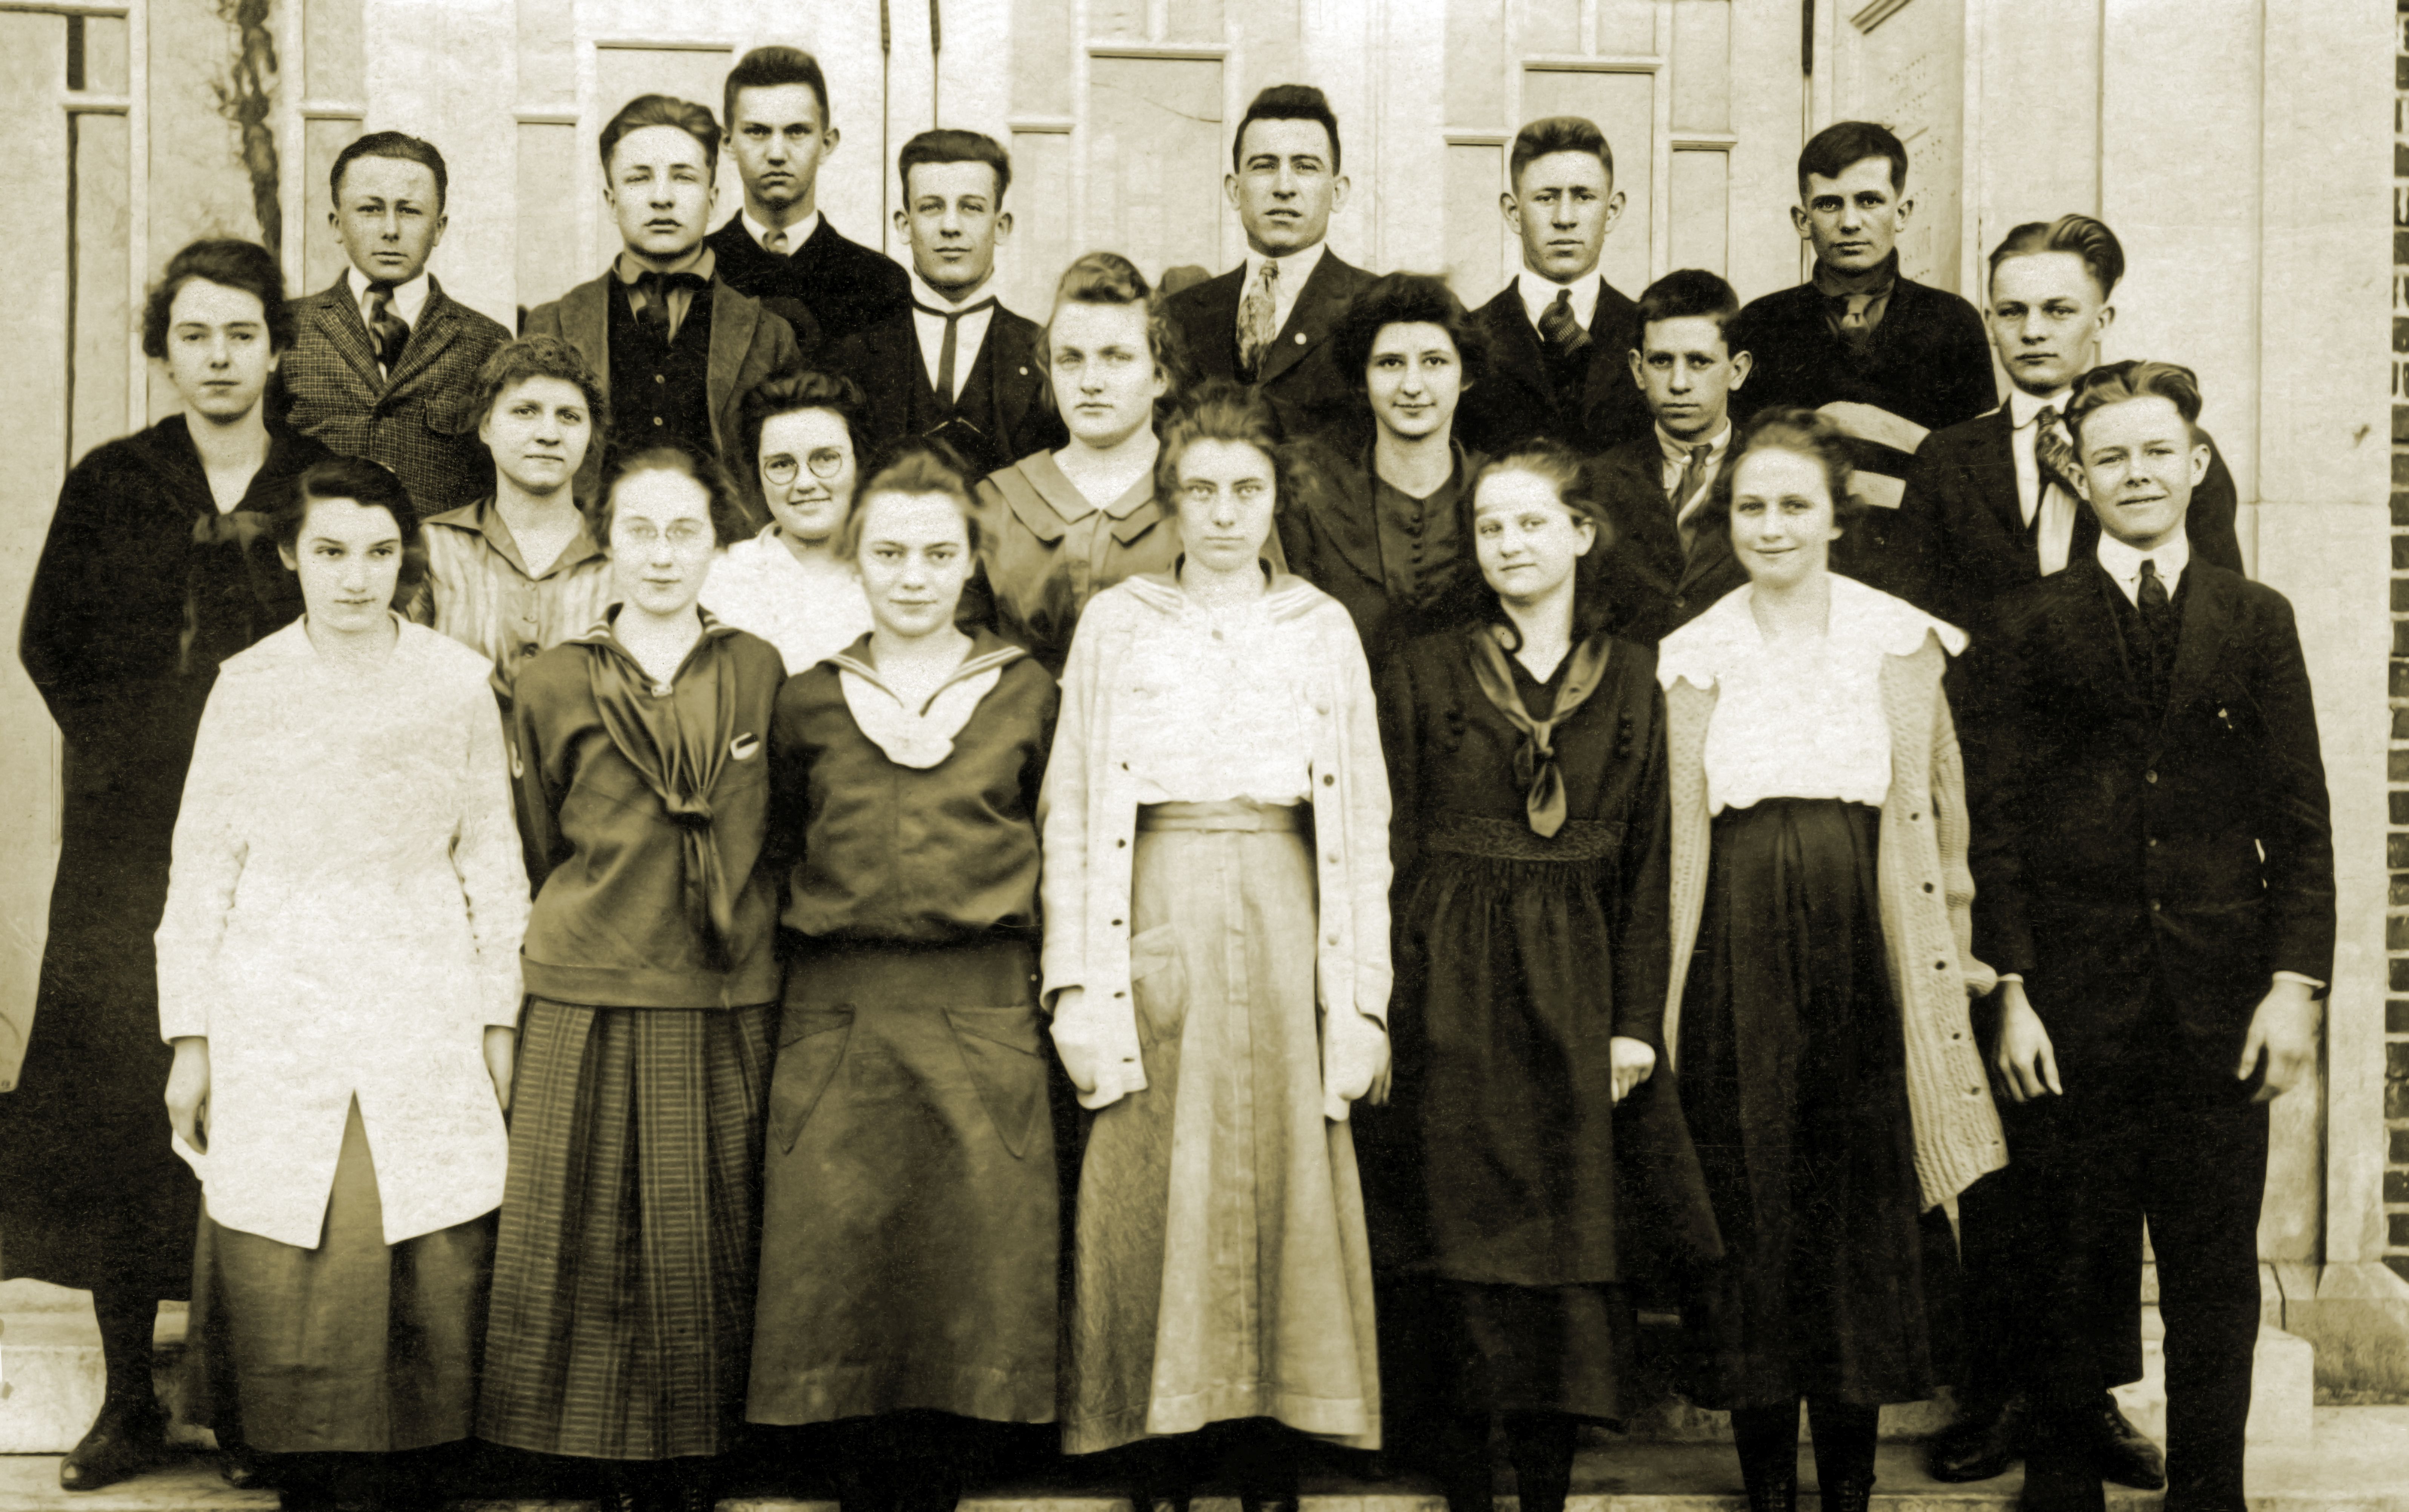 Brownsburg High School class of 1919 or 1920